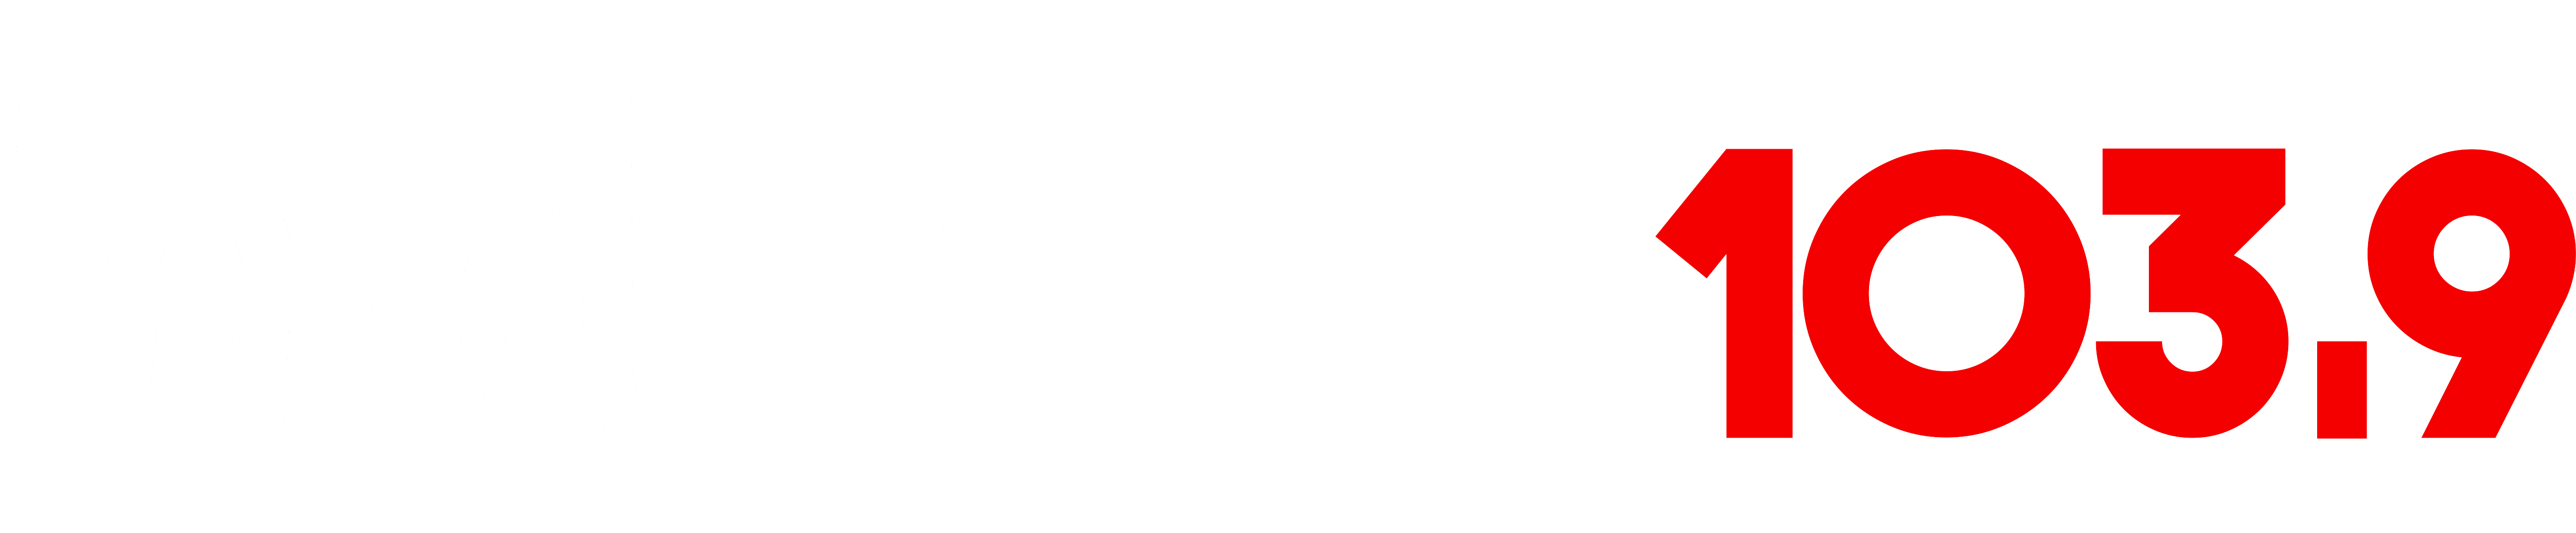 NdR Radio FM 103.9